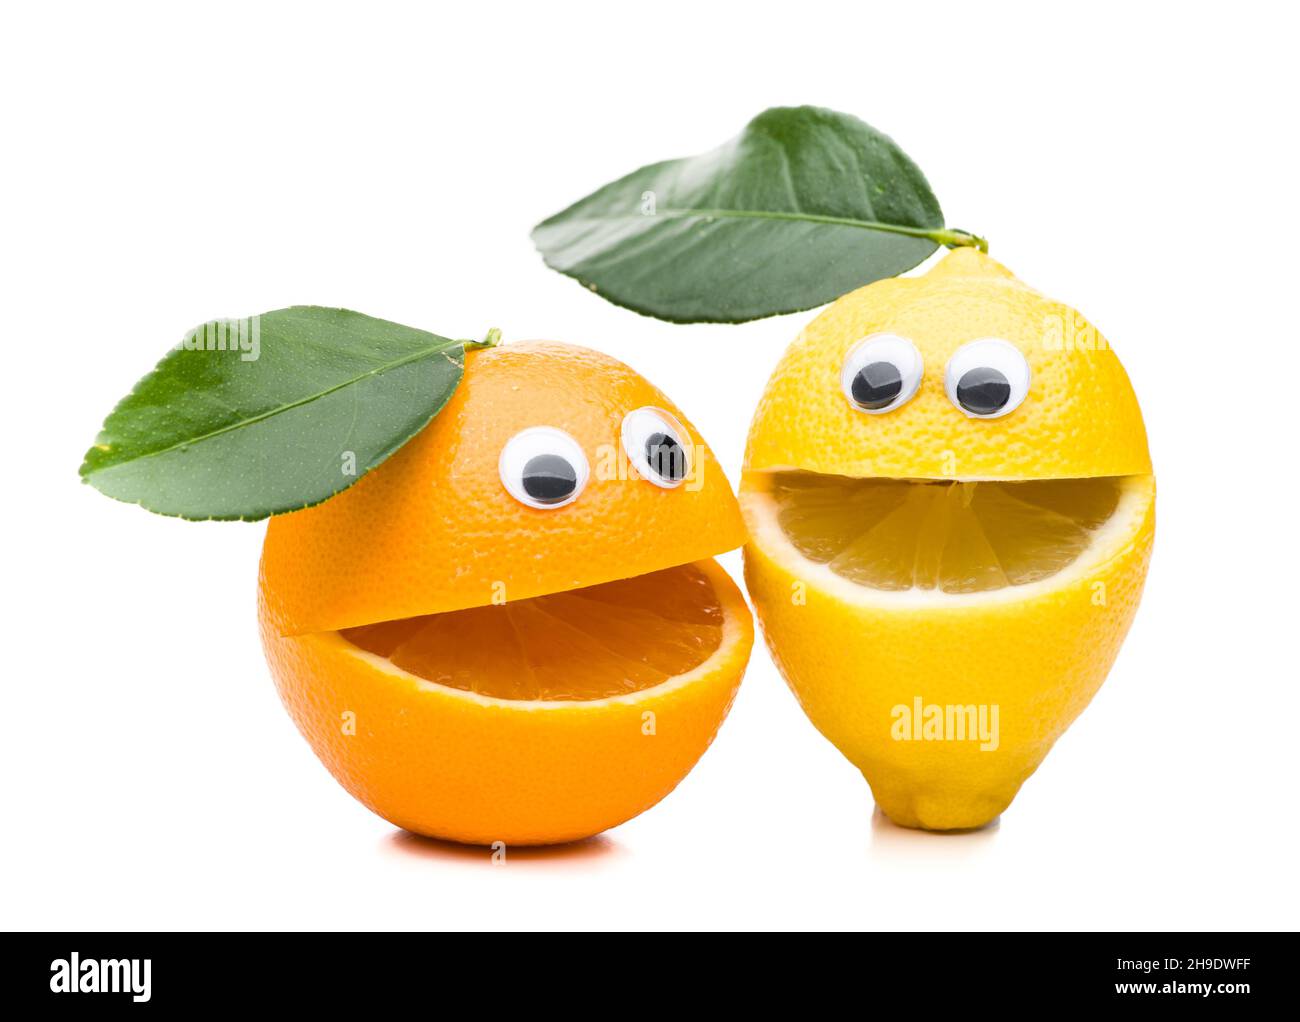 lemon, orange, face, couple, sing, head, fruit, laugh, mouth, friendly, eyes wide, similar, equal, fresh, twins, background, isolated, smile, lively, Stock Photo